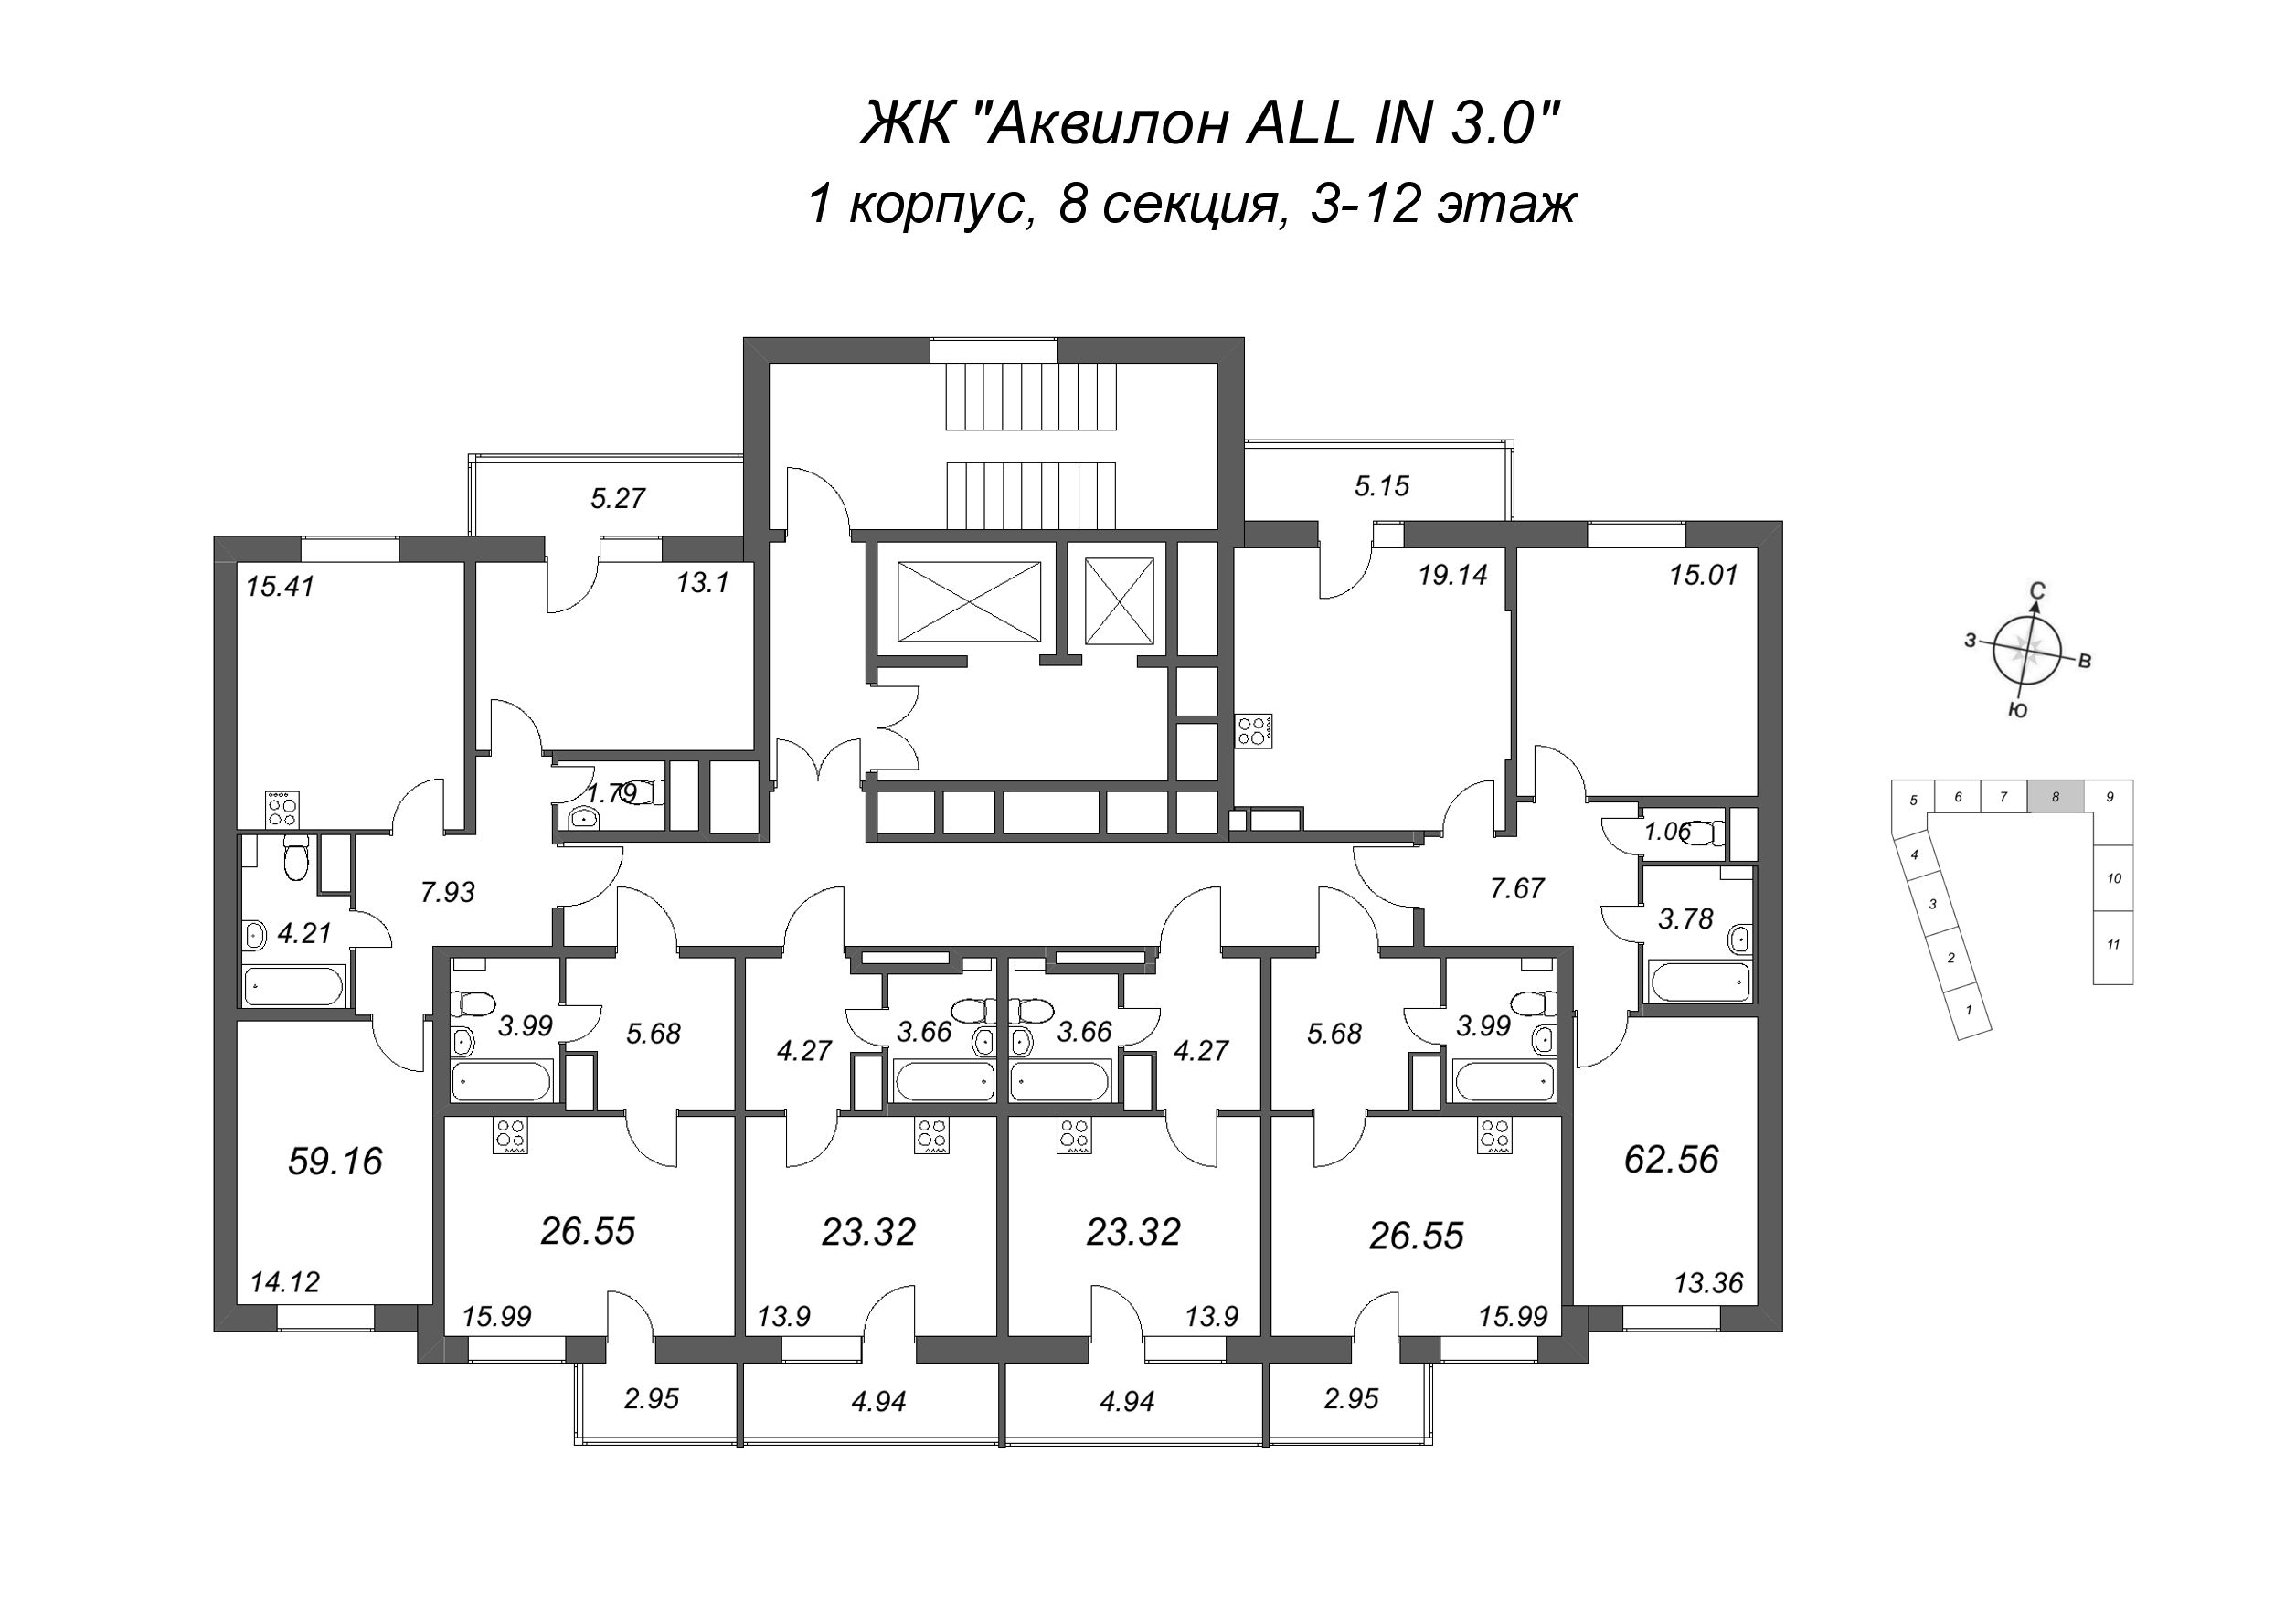 3-комнатная (Евро) квартира, 62.56 м² - планировка этажа